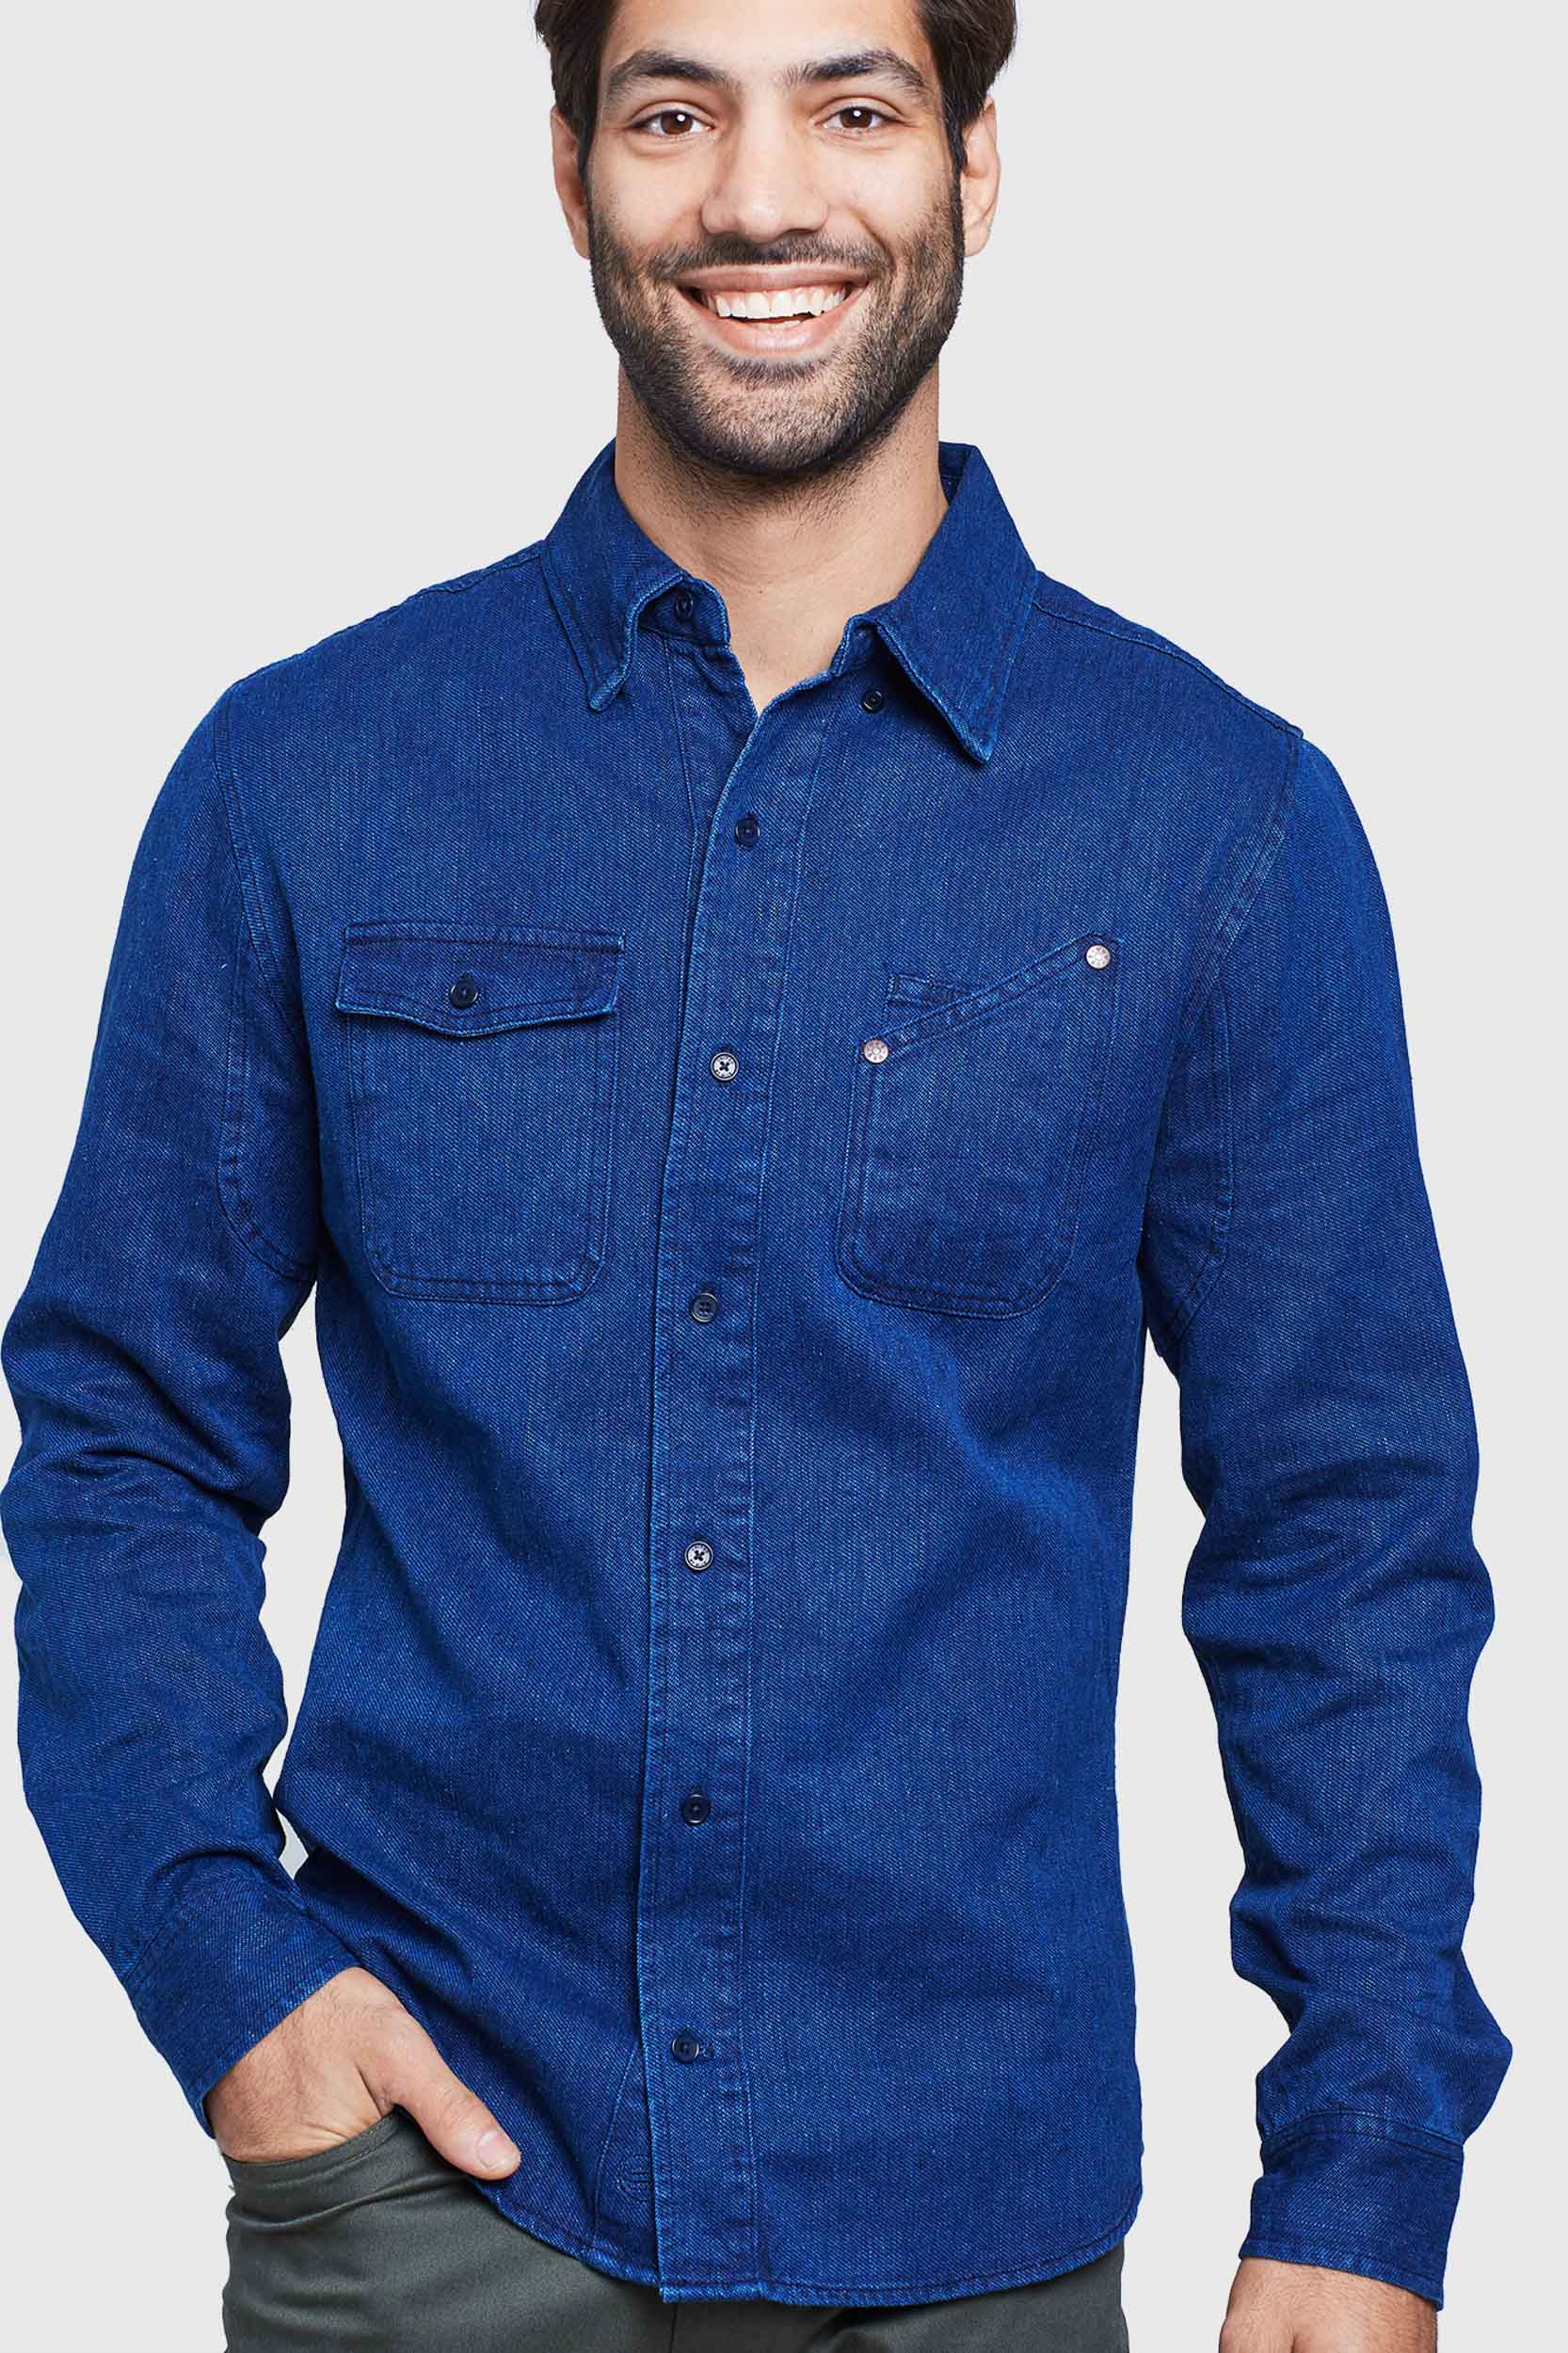 blue jeans shirt